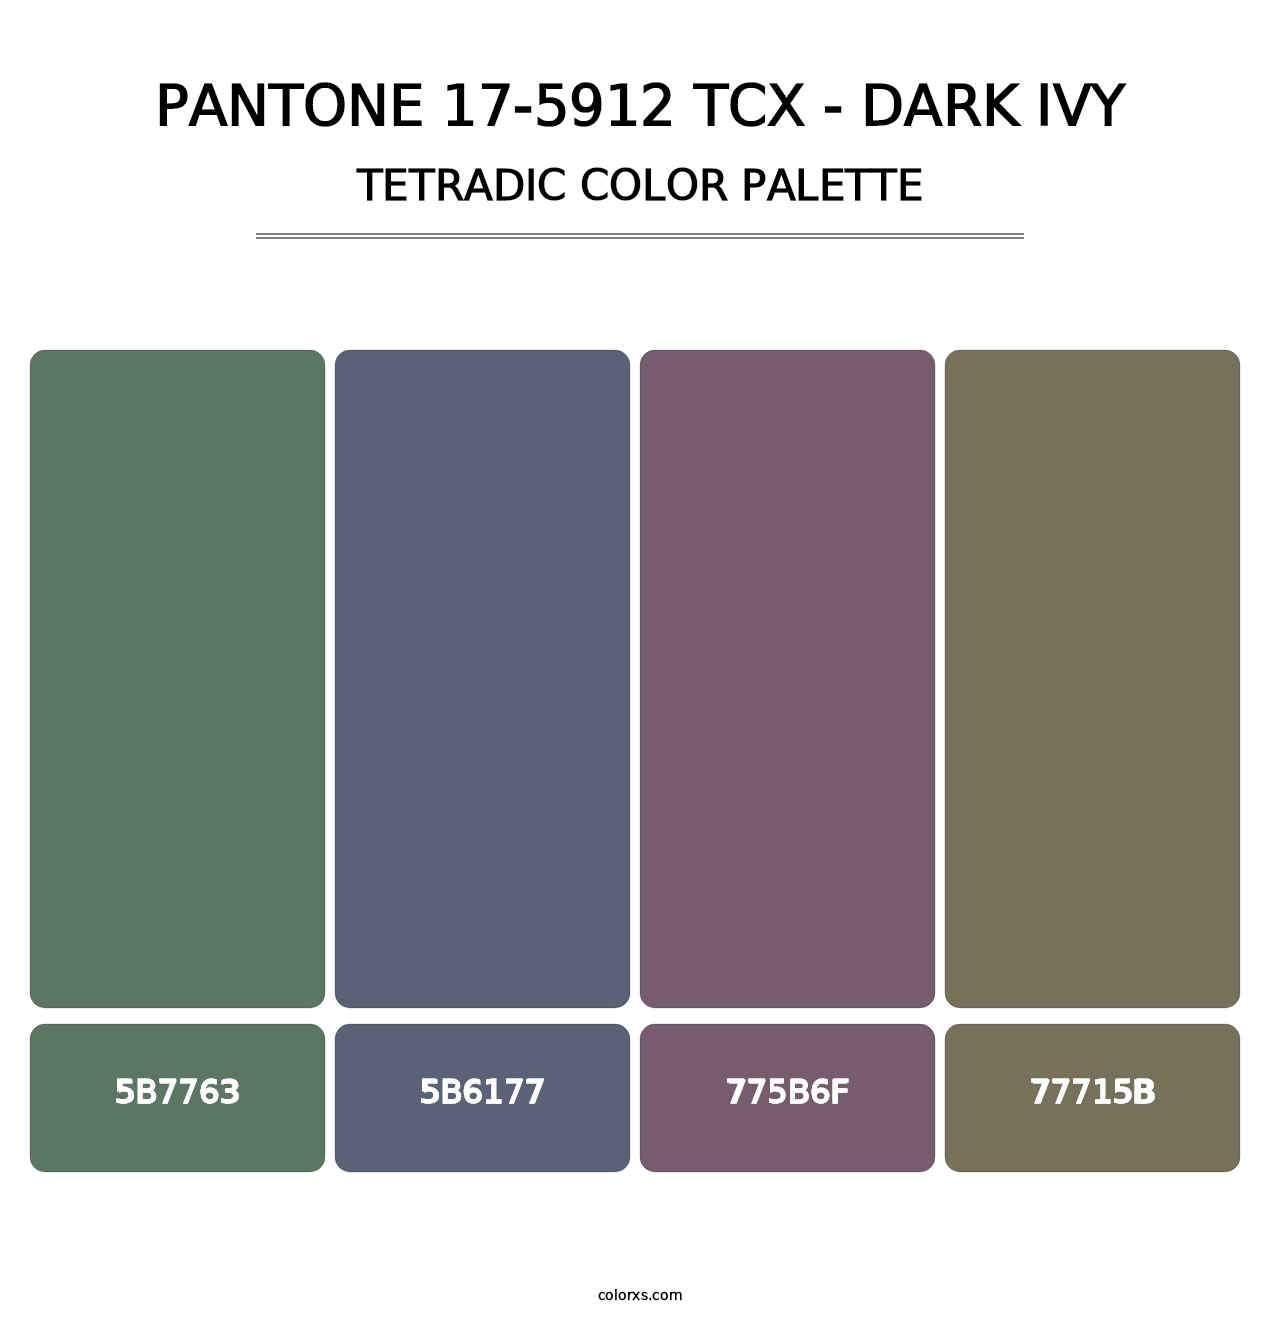 PANTONE 17-5912 TCX - Dark Ivy - Tetradic Color Palette